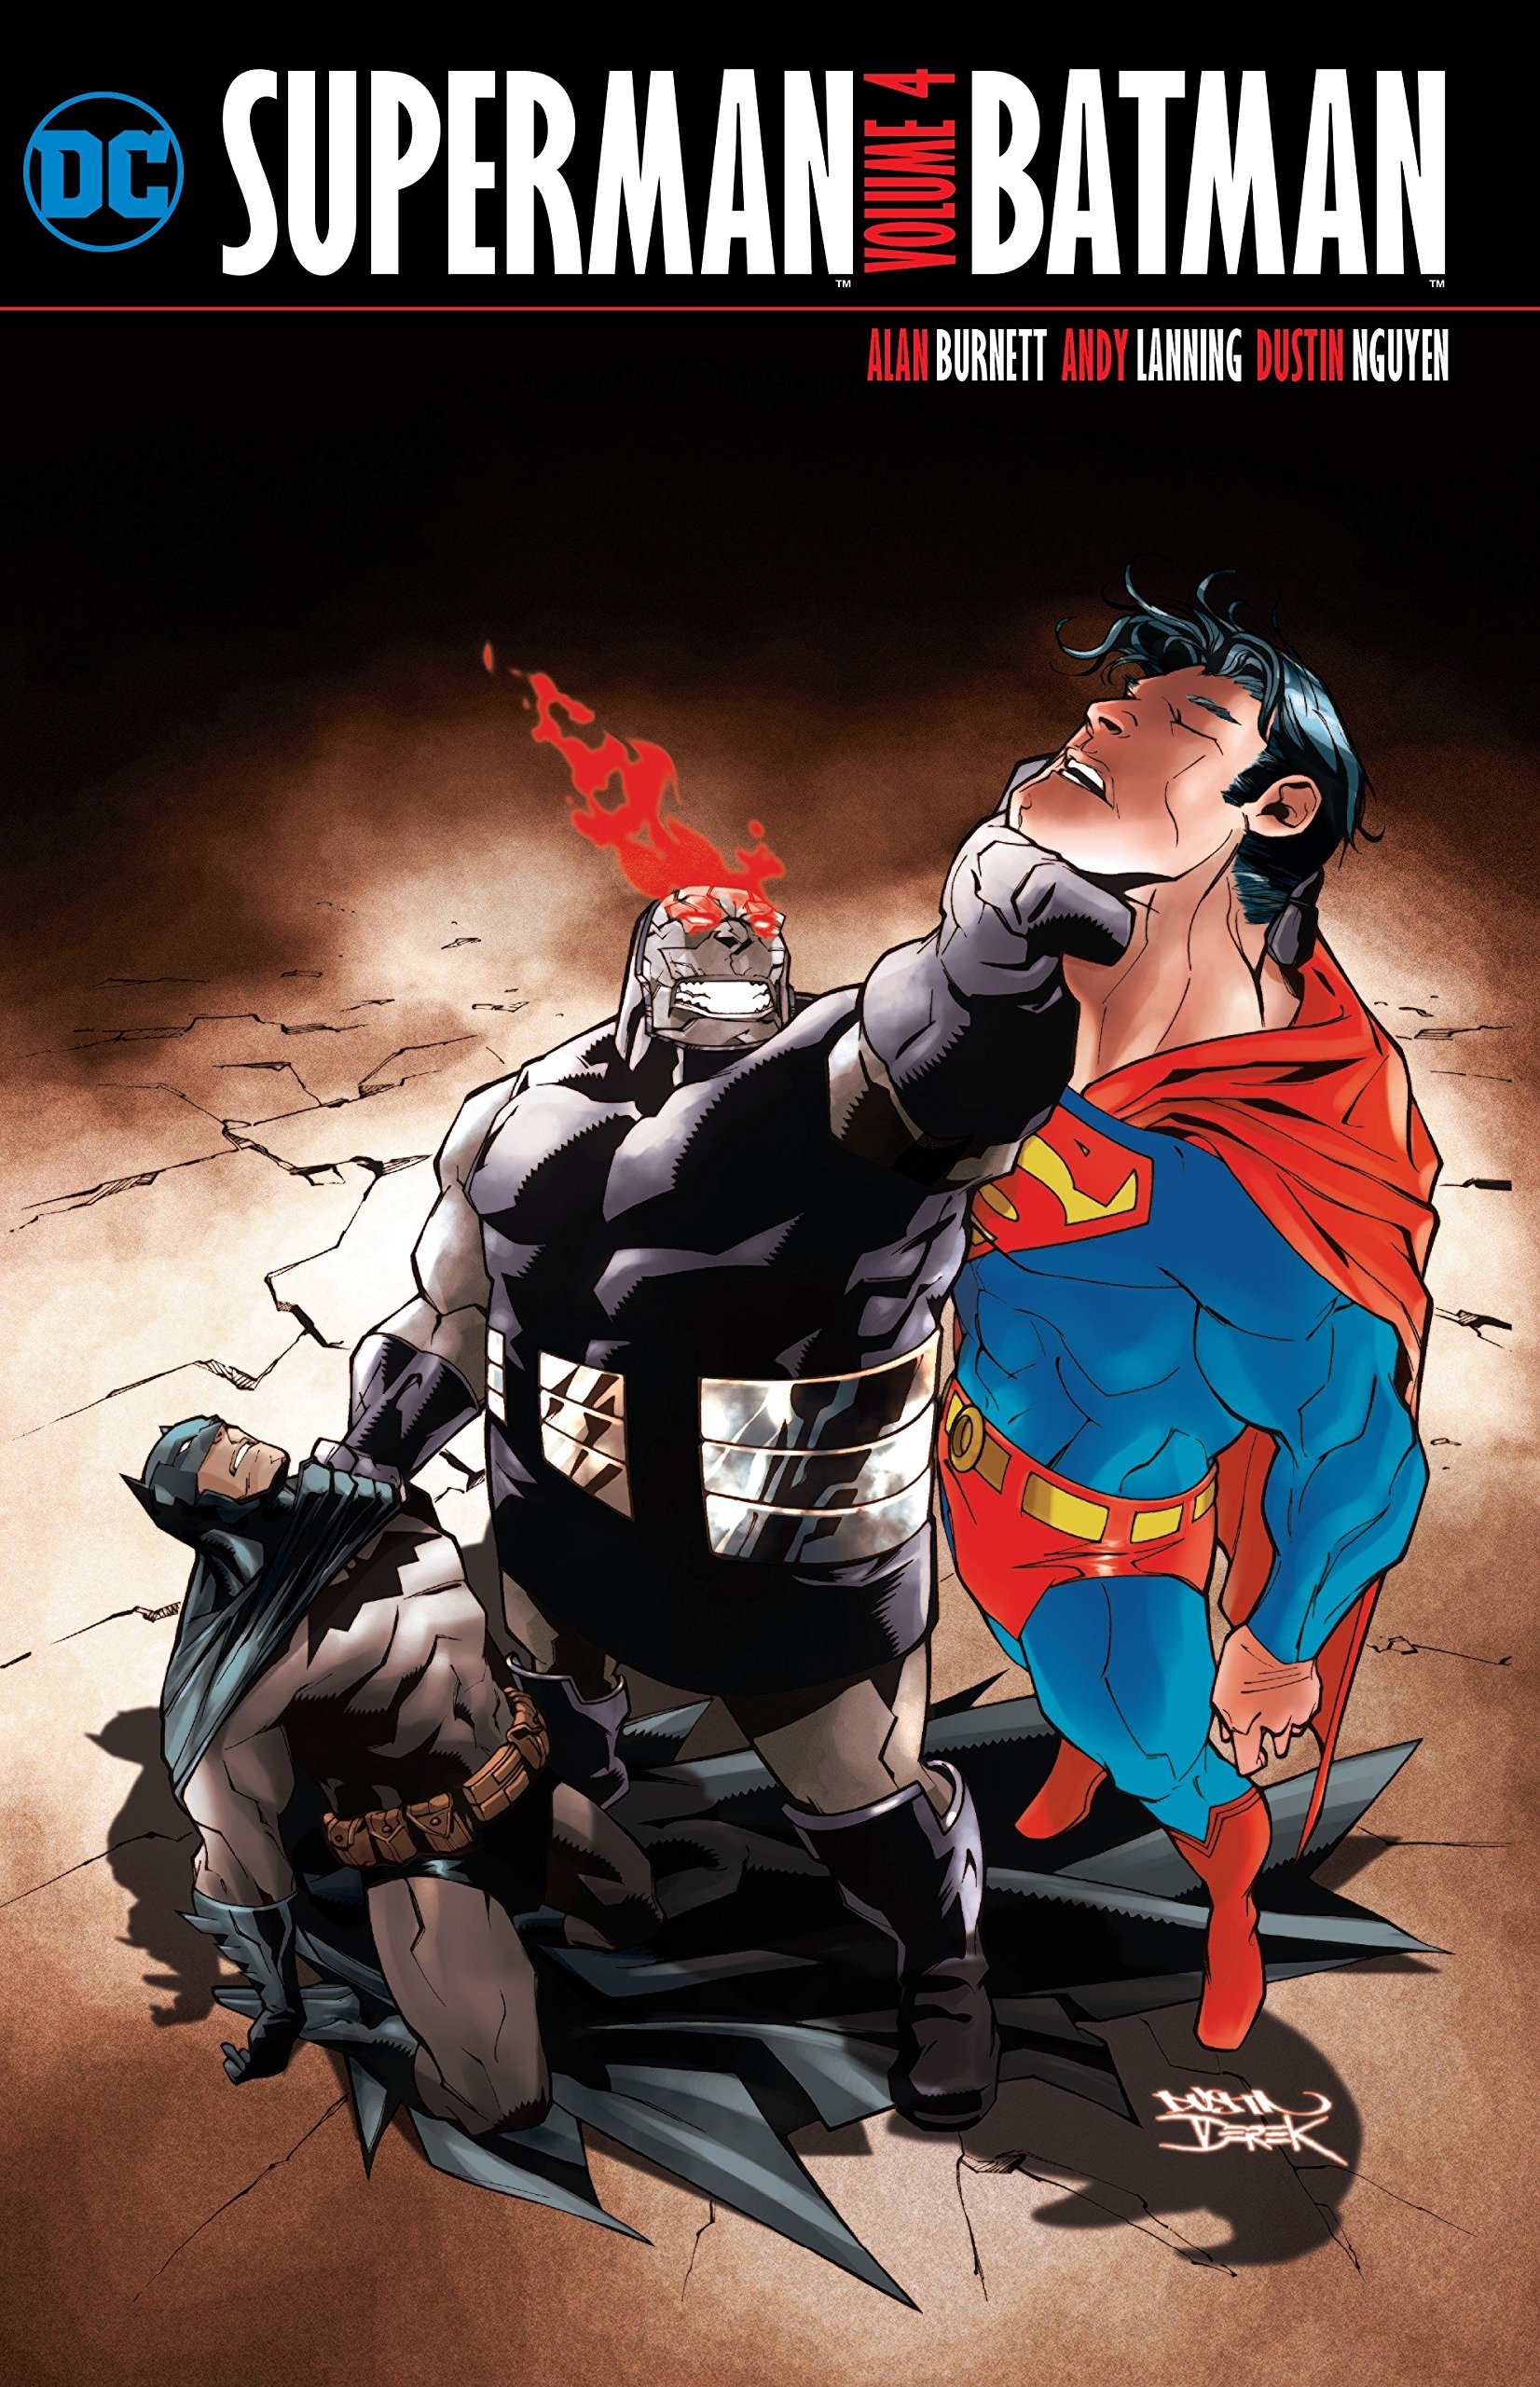 Superman Batman Graphic Novel Volume 4